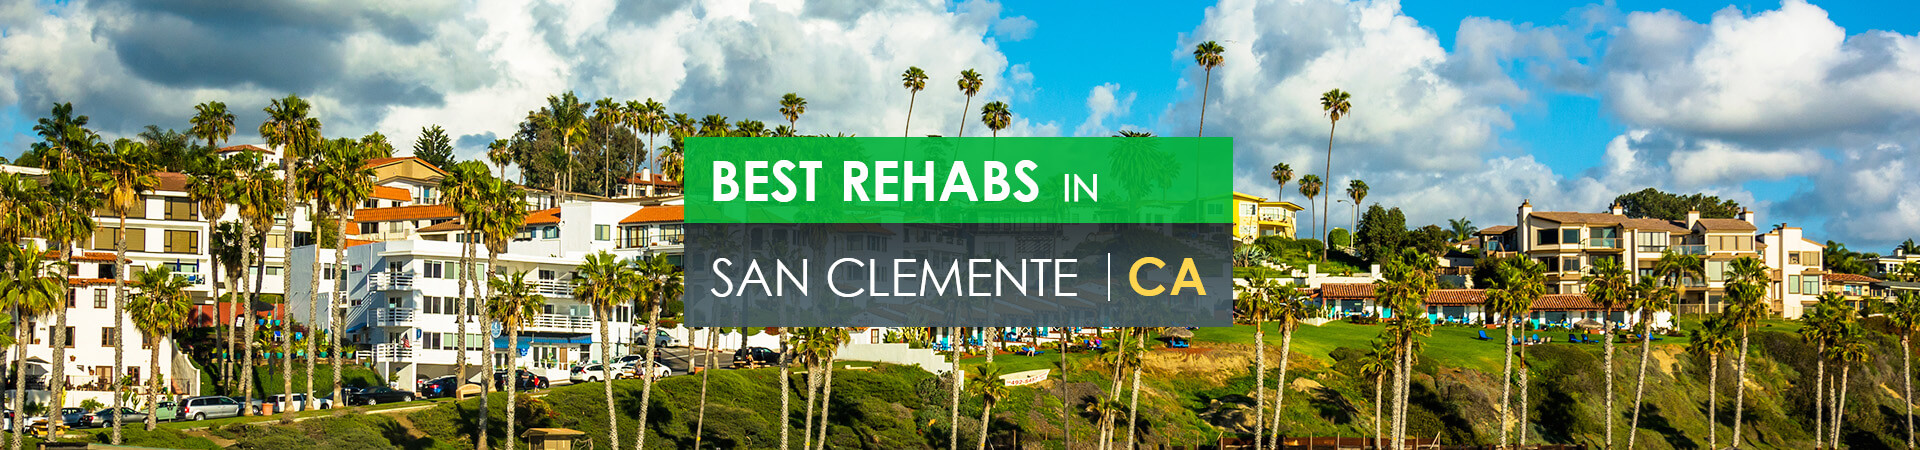 Best rehabs in San Clemente, CA